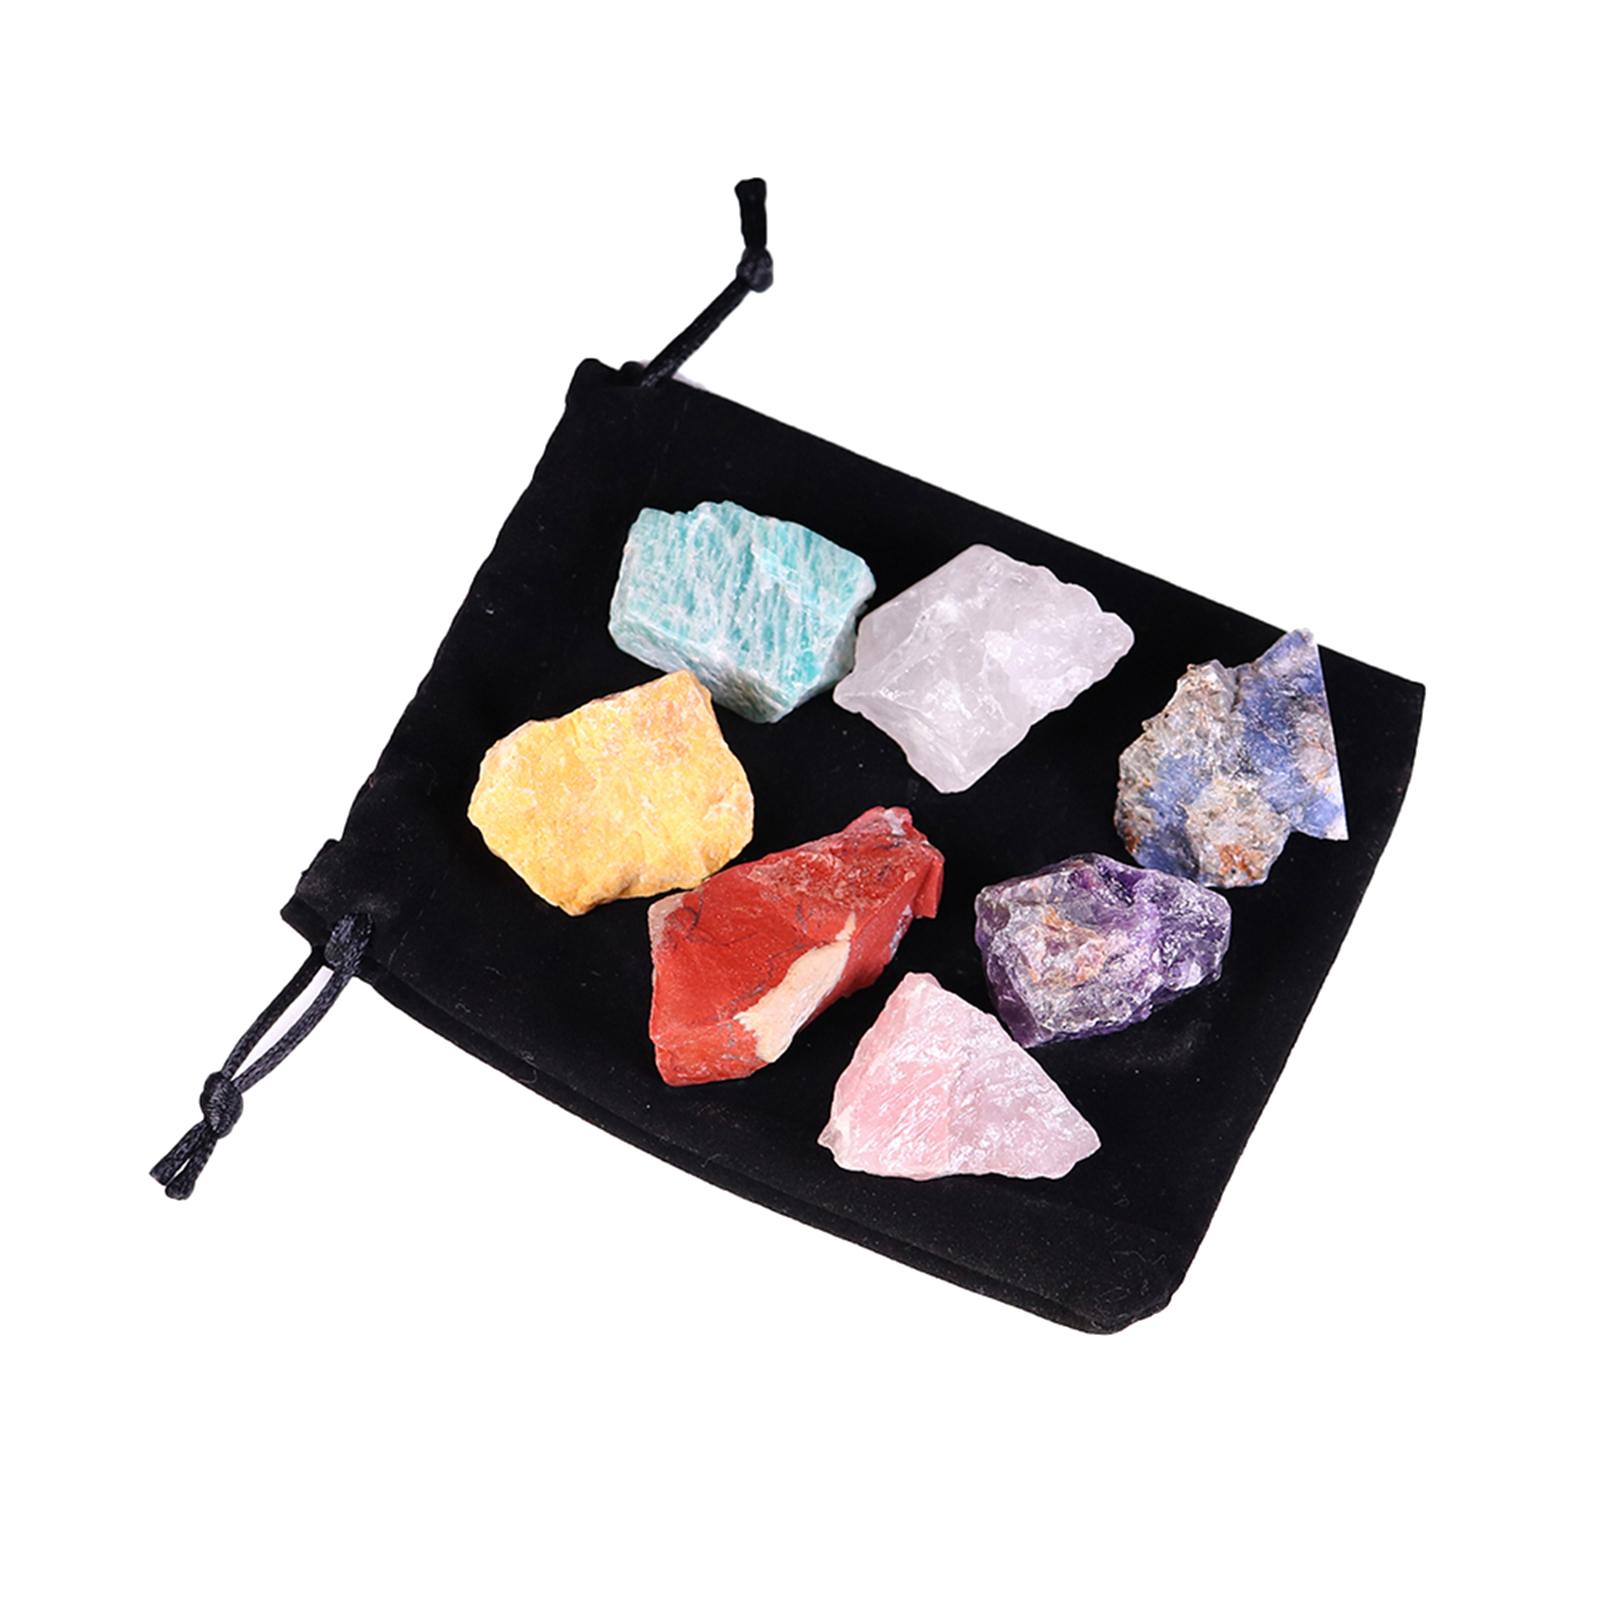 7pcs/Set Energy Infused Natural Raw Heal Crystals Tumbled Stones 7 Colors Chakra Stones Large Gemstones